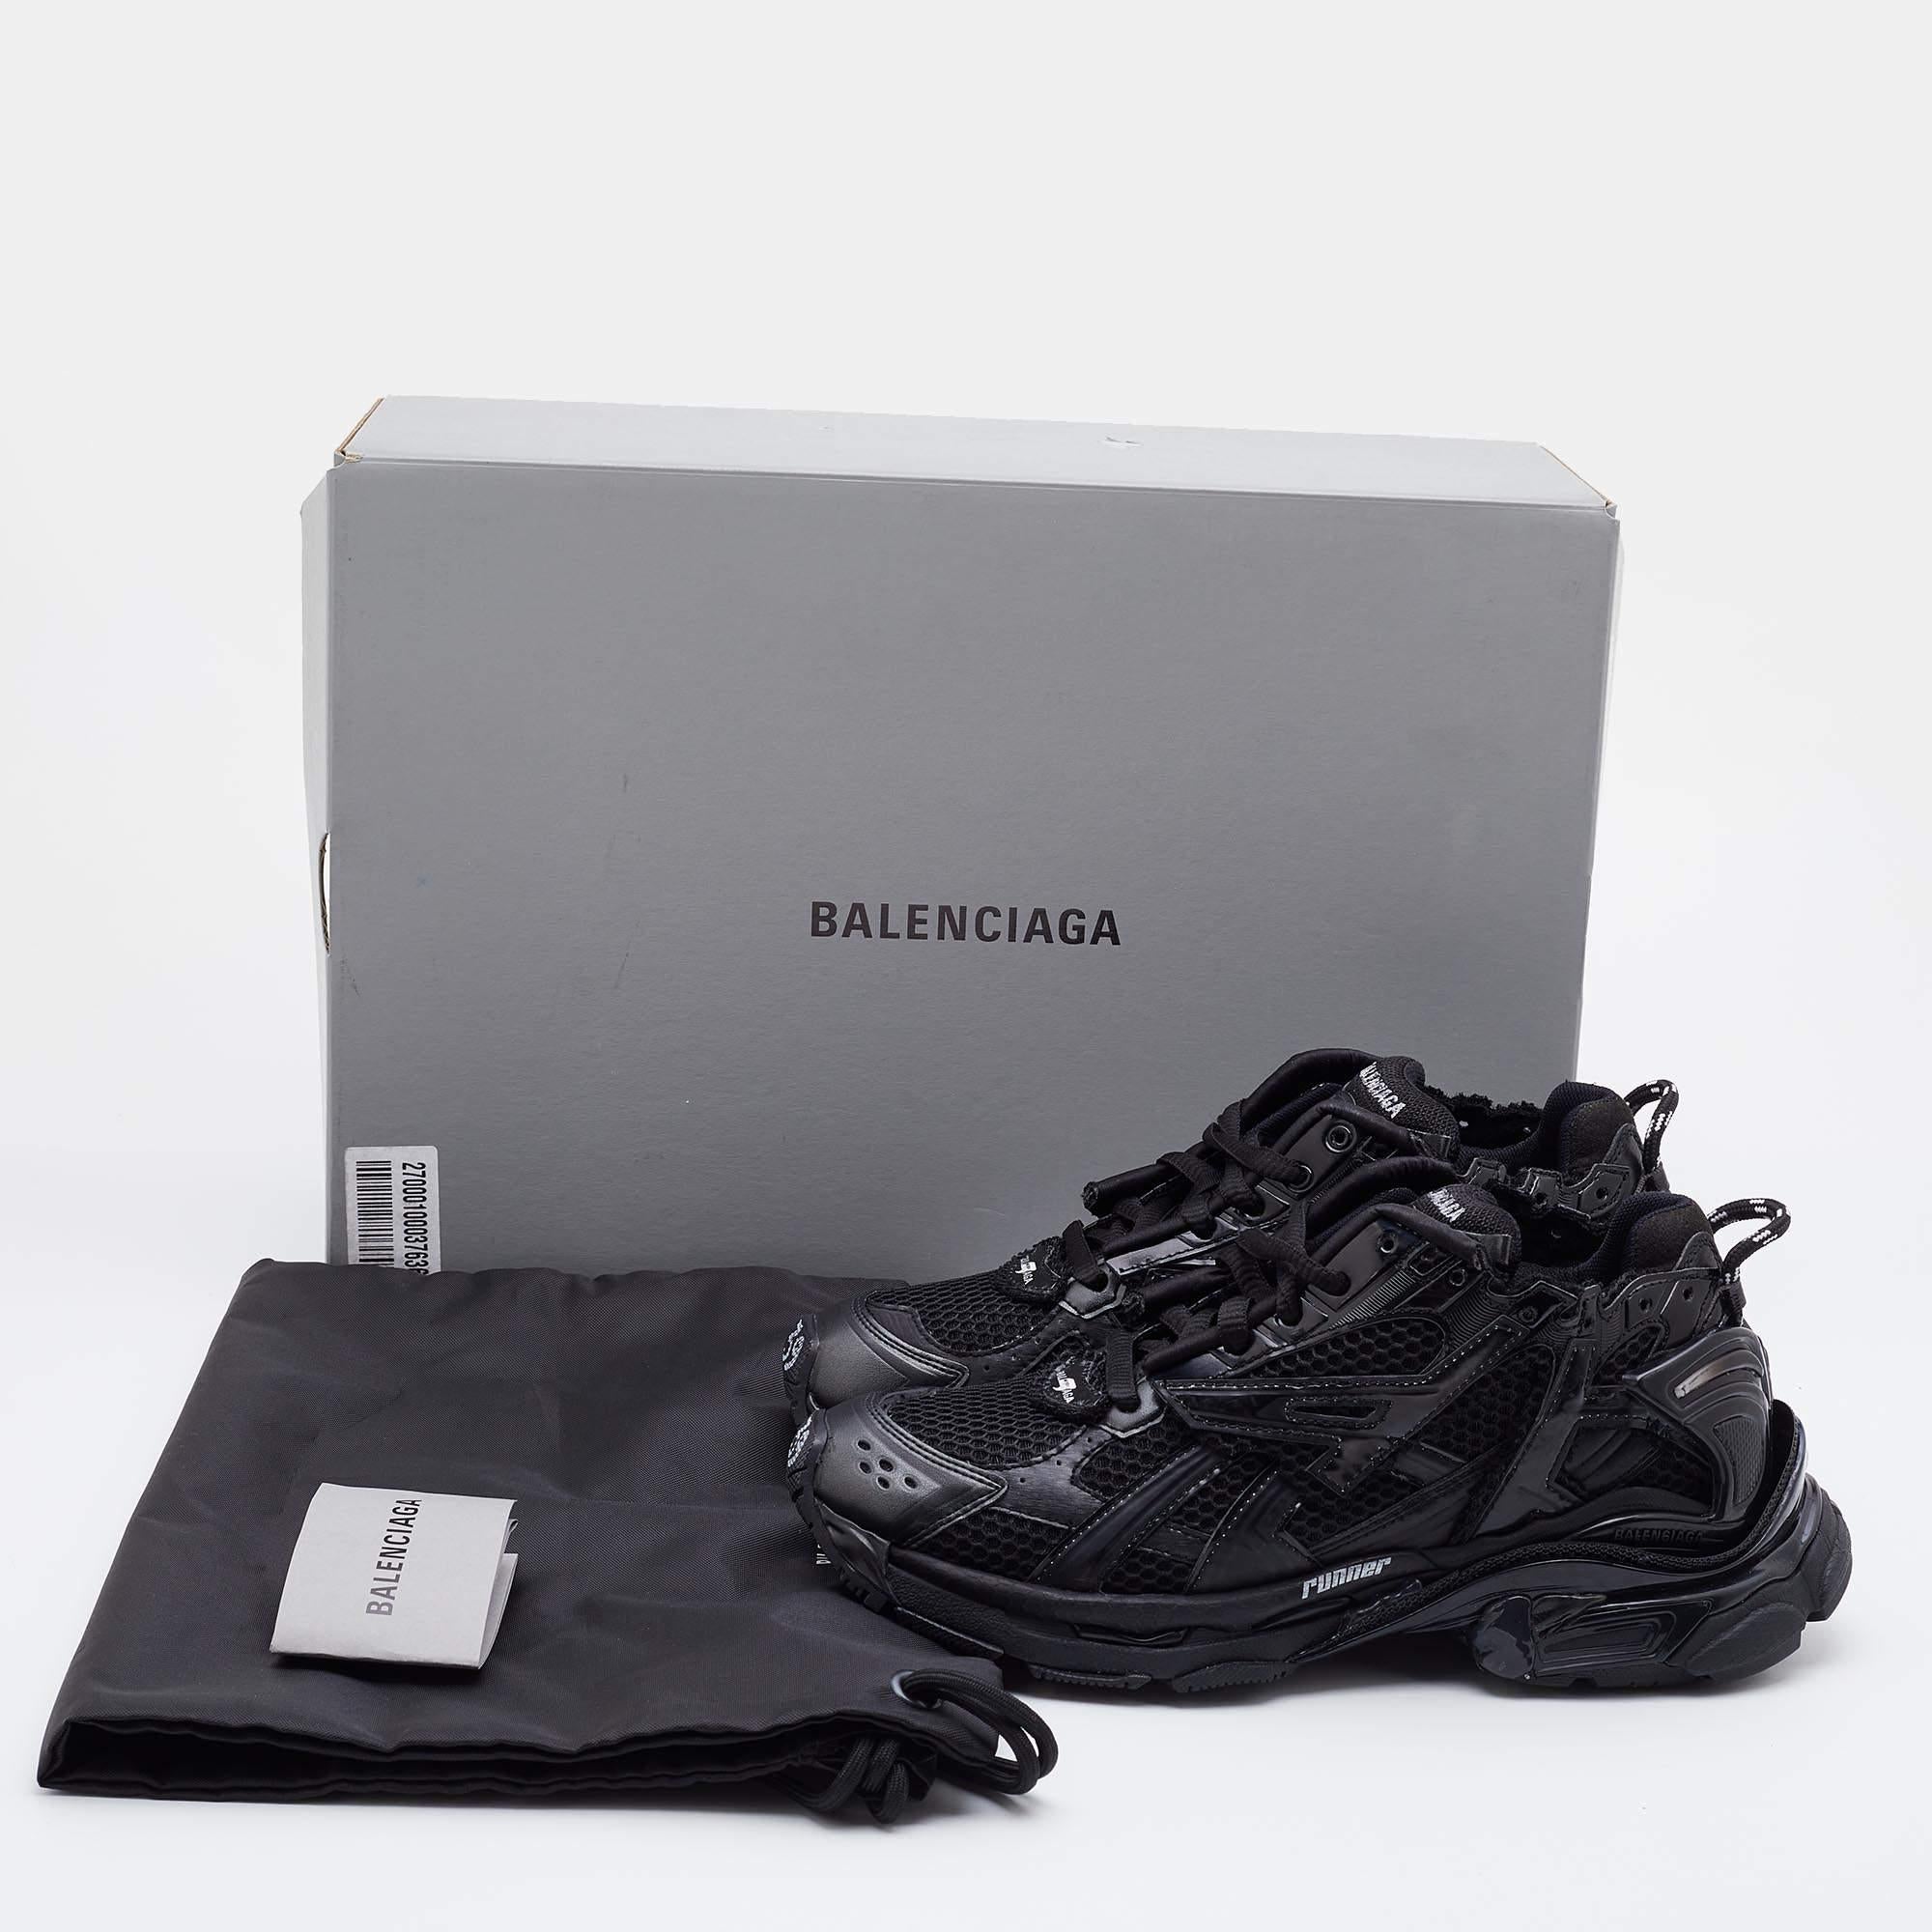 Balenciaga Black Neoprene, Leather and Mesh Sneakers Size 39 3